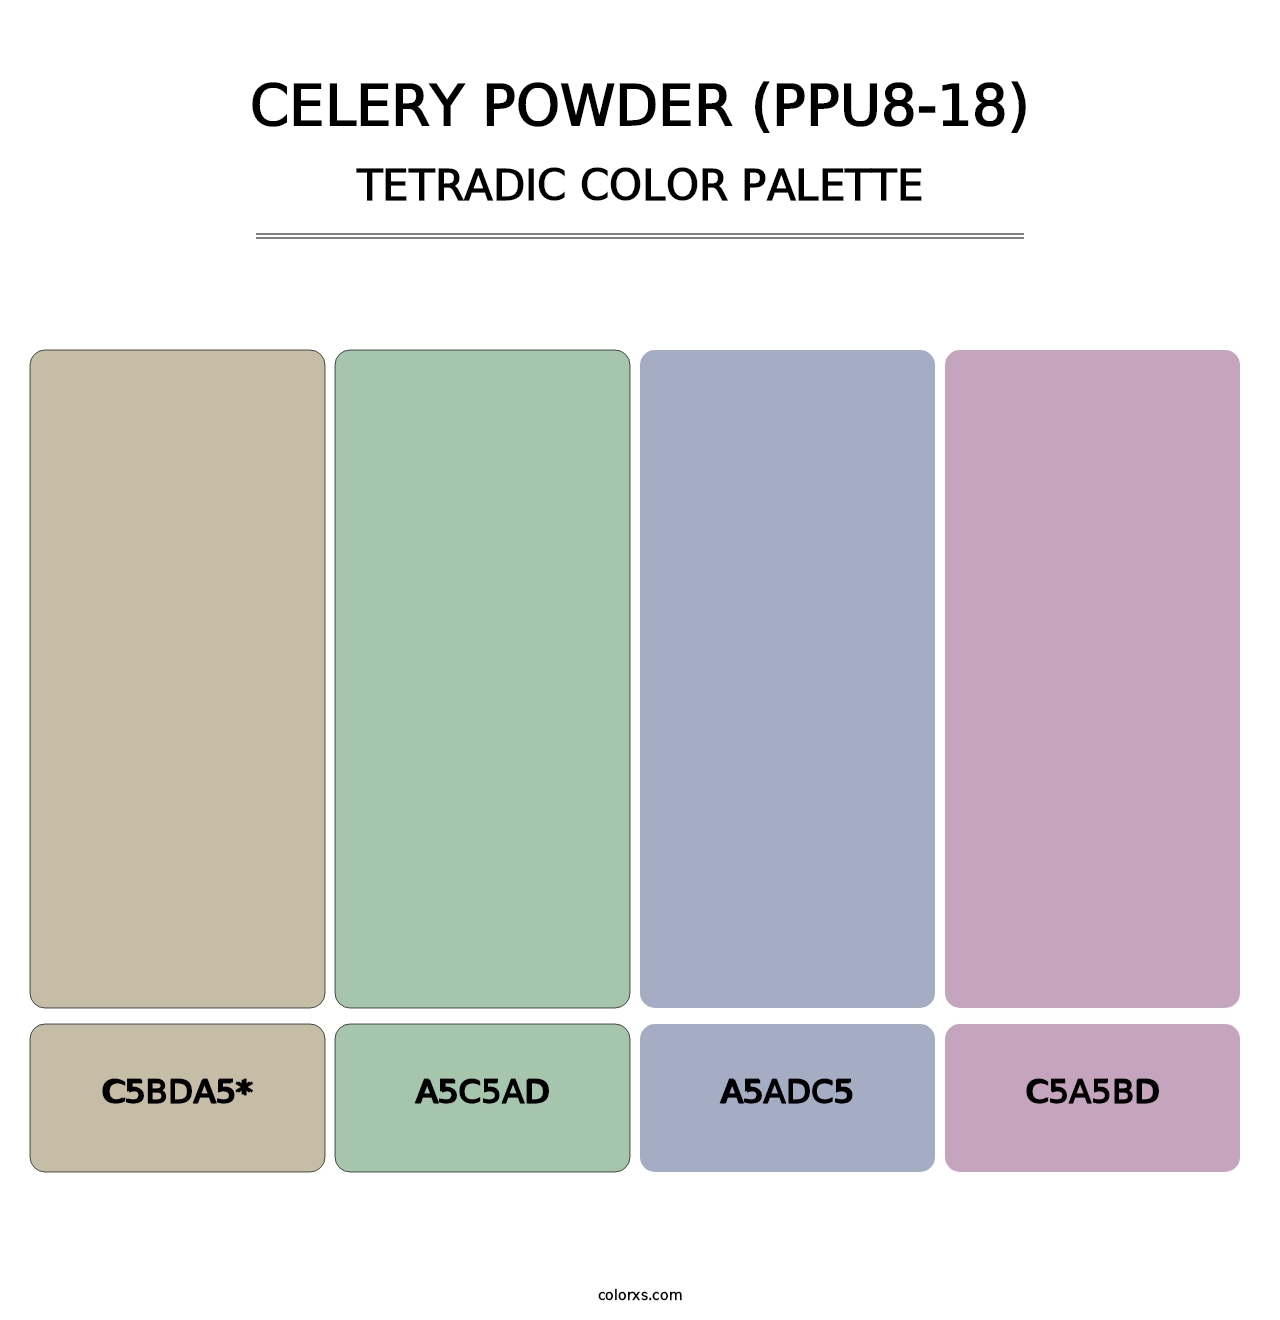 Celery Powder (PPU8-18) - Tetradic Color Palette